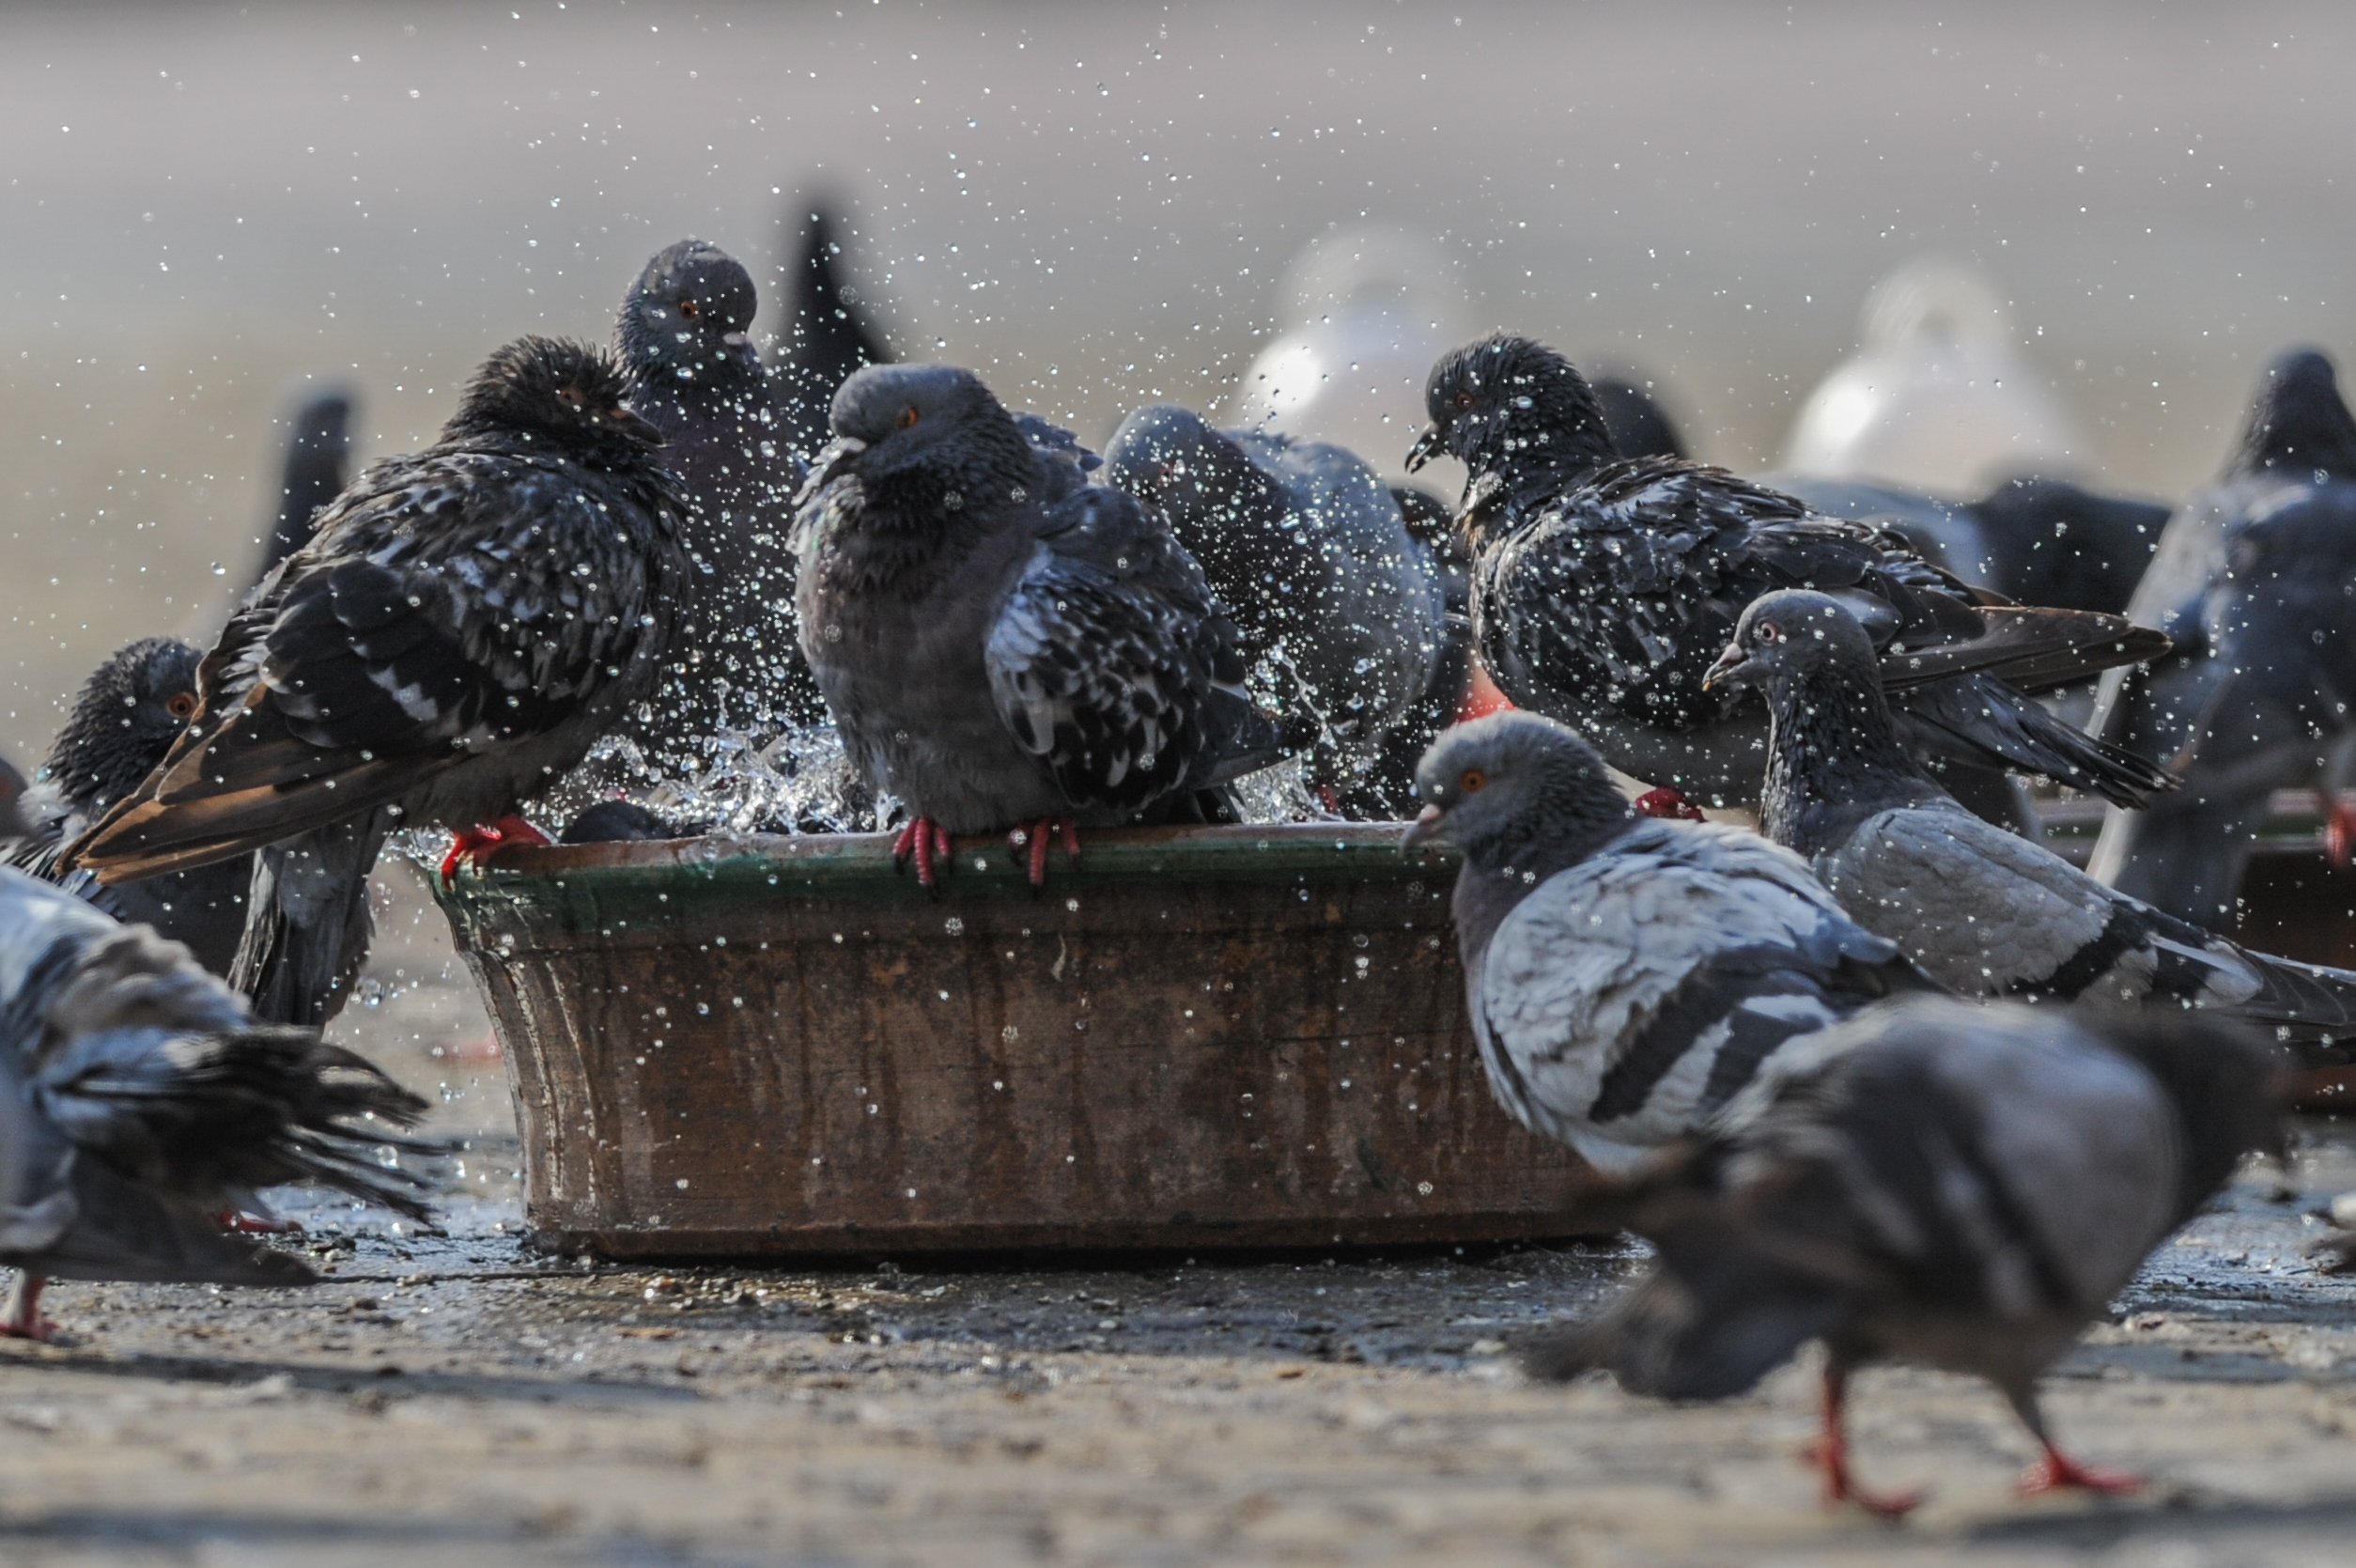 Buckets of mercy provide water to birds, animals in Kuwait